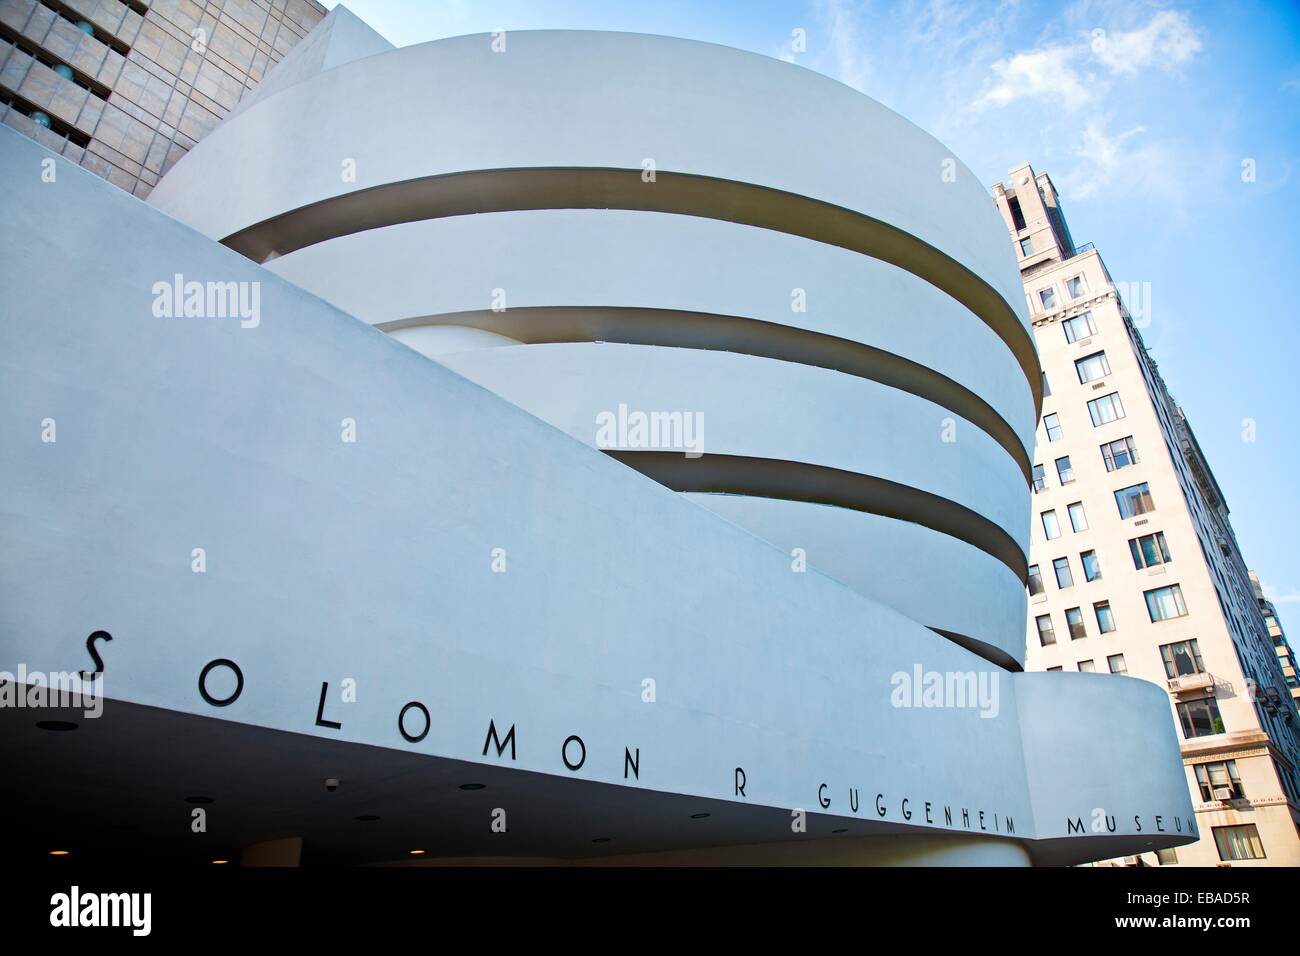 Solomon R Guggenheim Museum on Fifth Avenue, designed by Frank Lloyd Wright, Manhattan, New York City  USA. Stock Photo